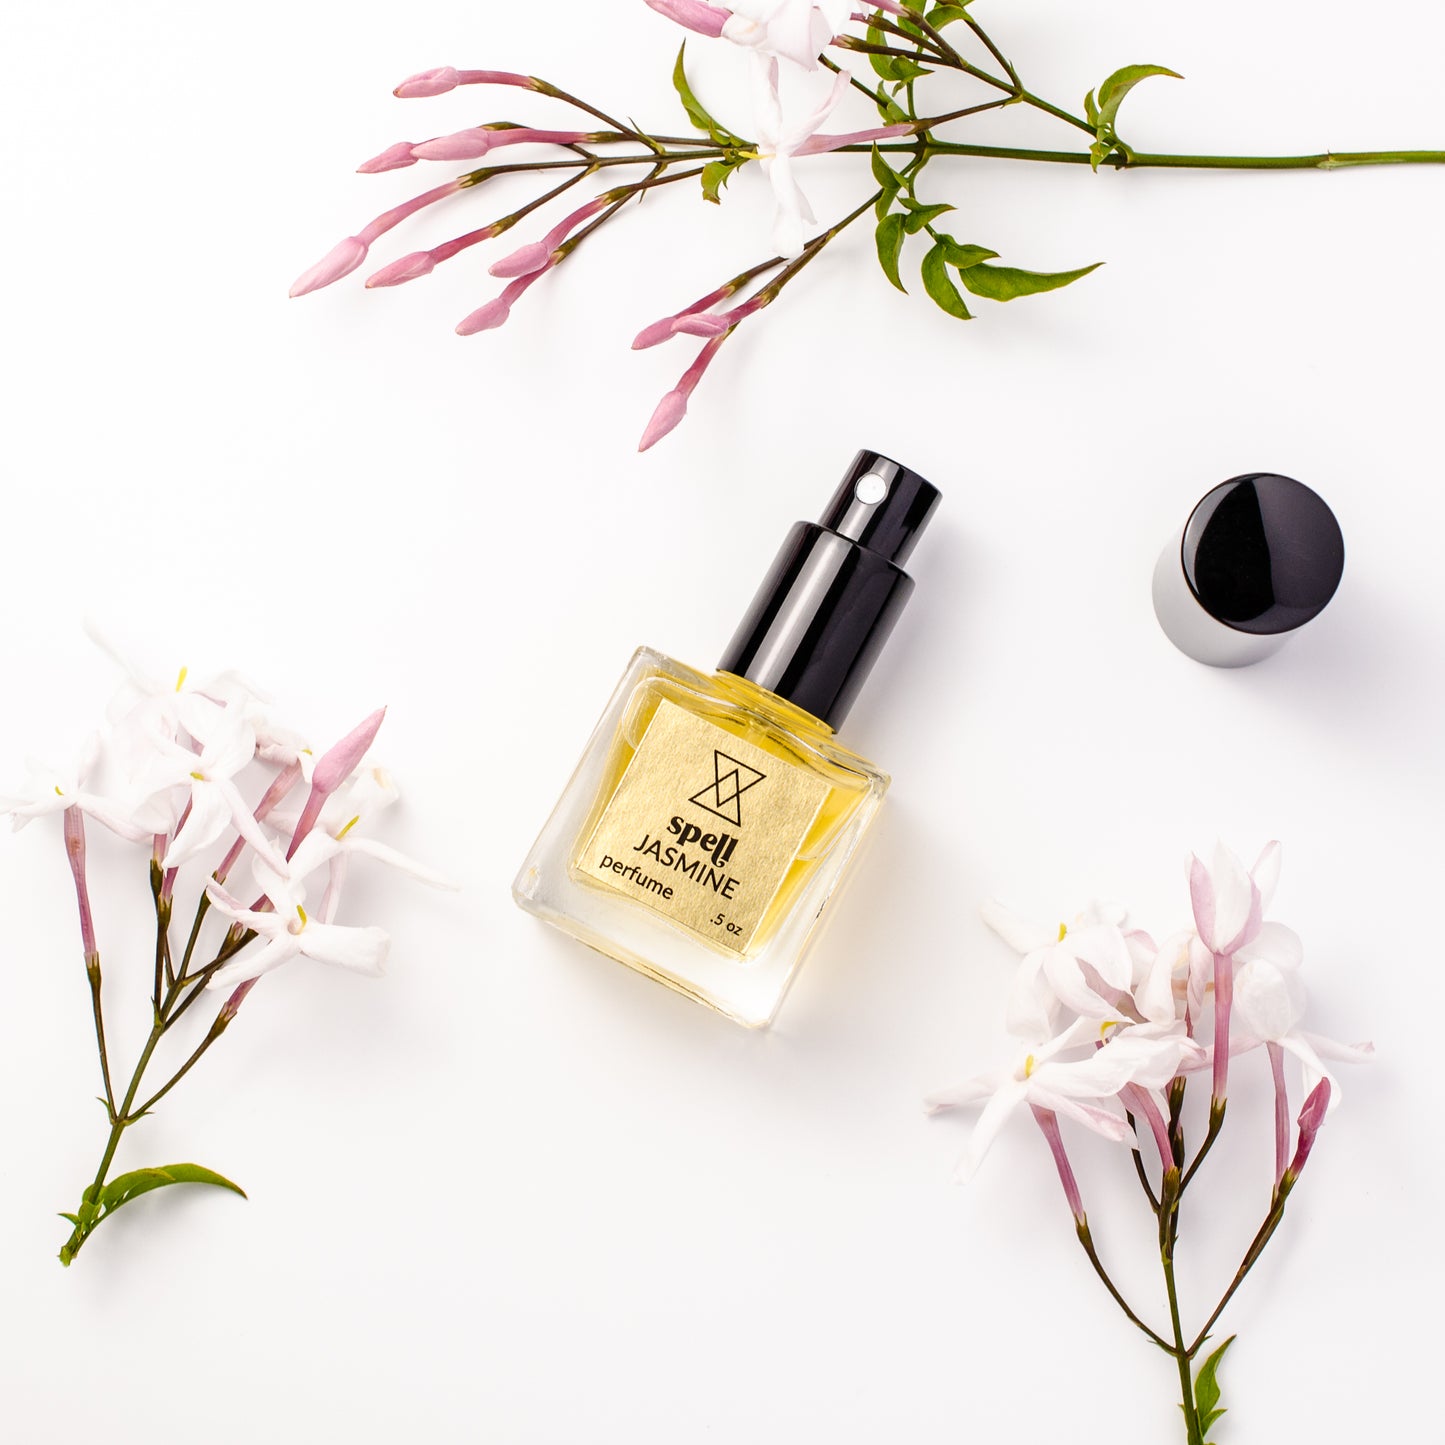 botanical jasmine perfume with flowers open